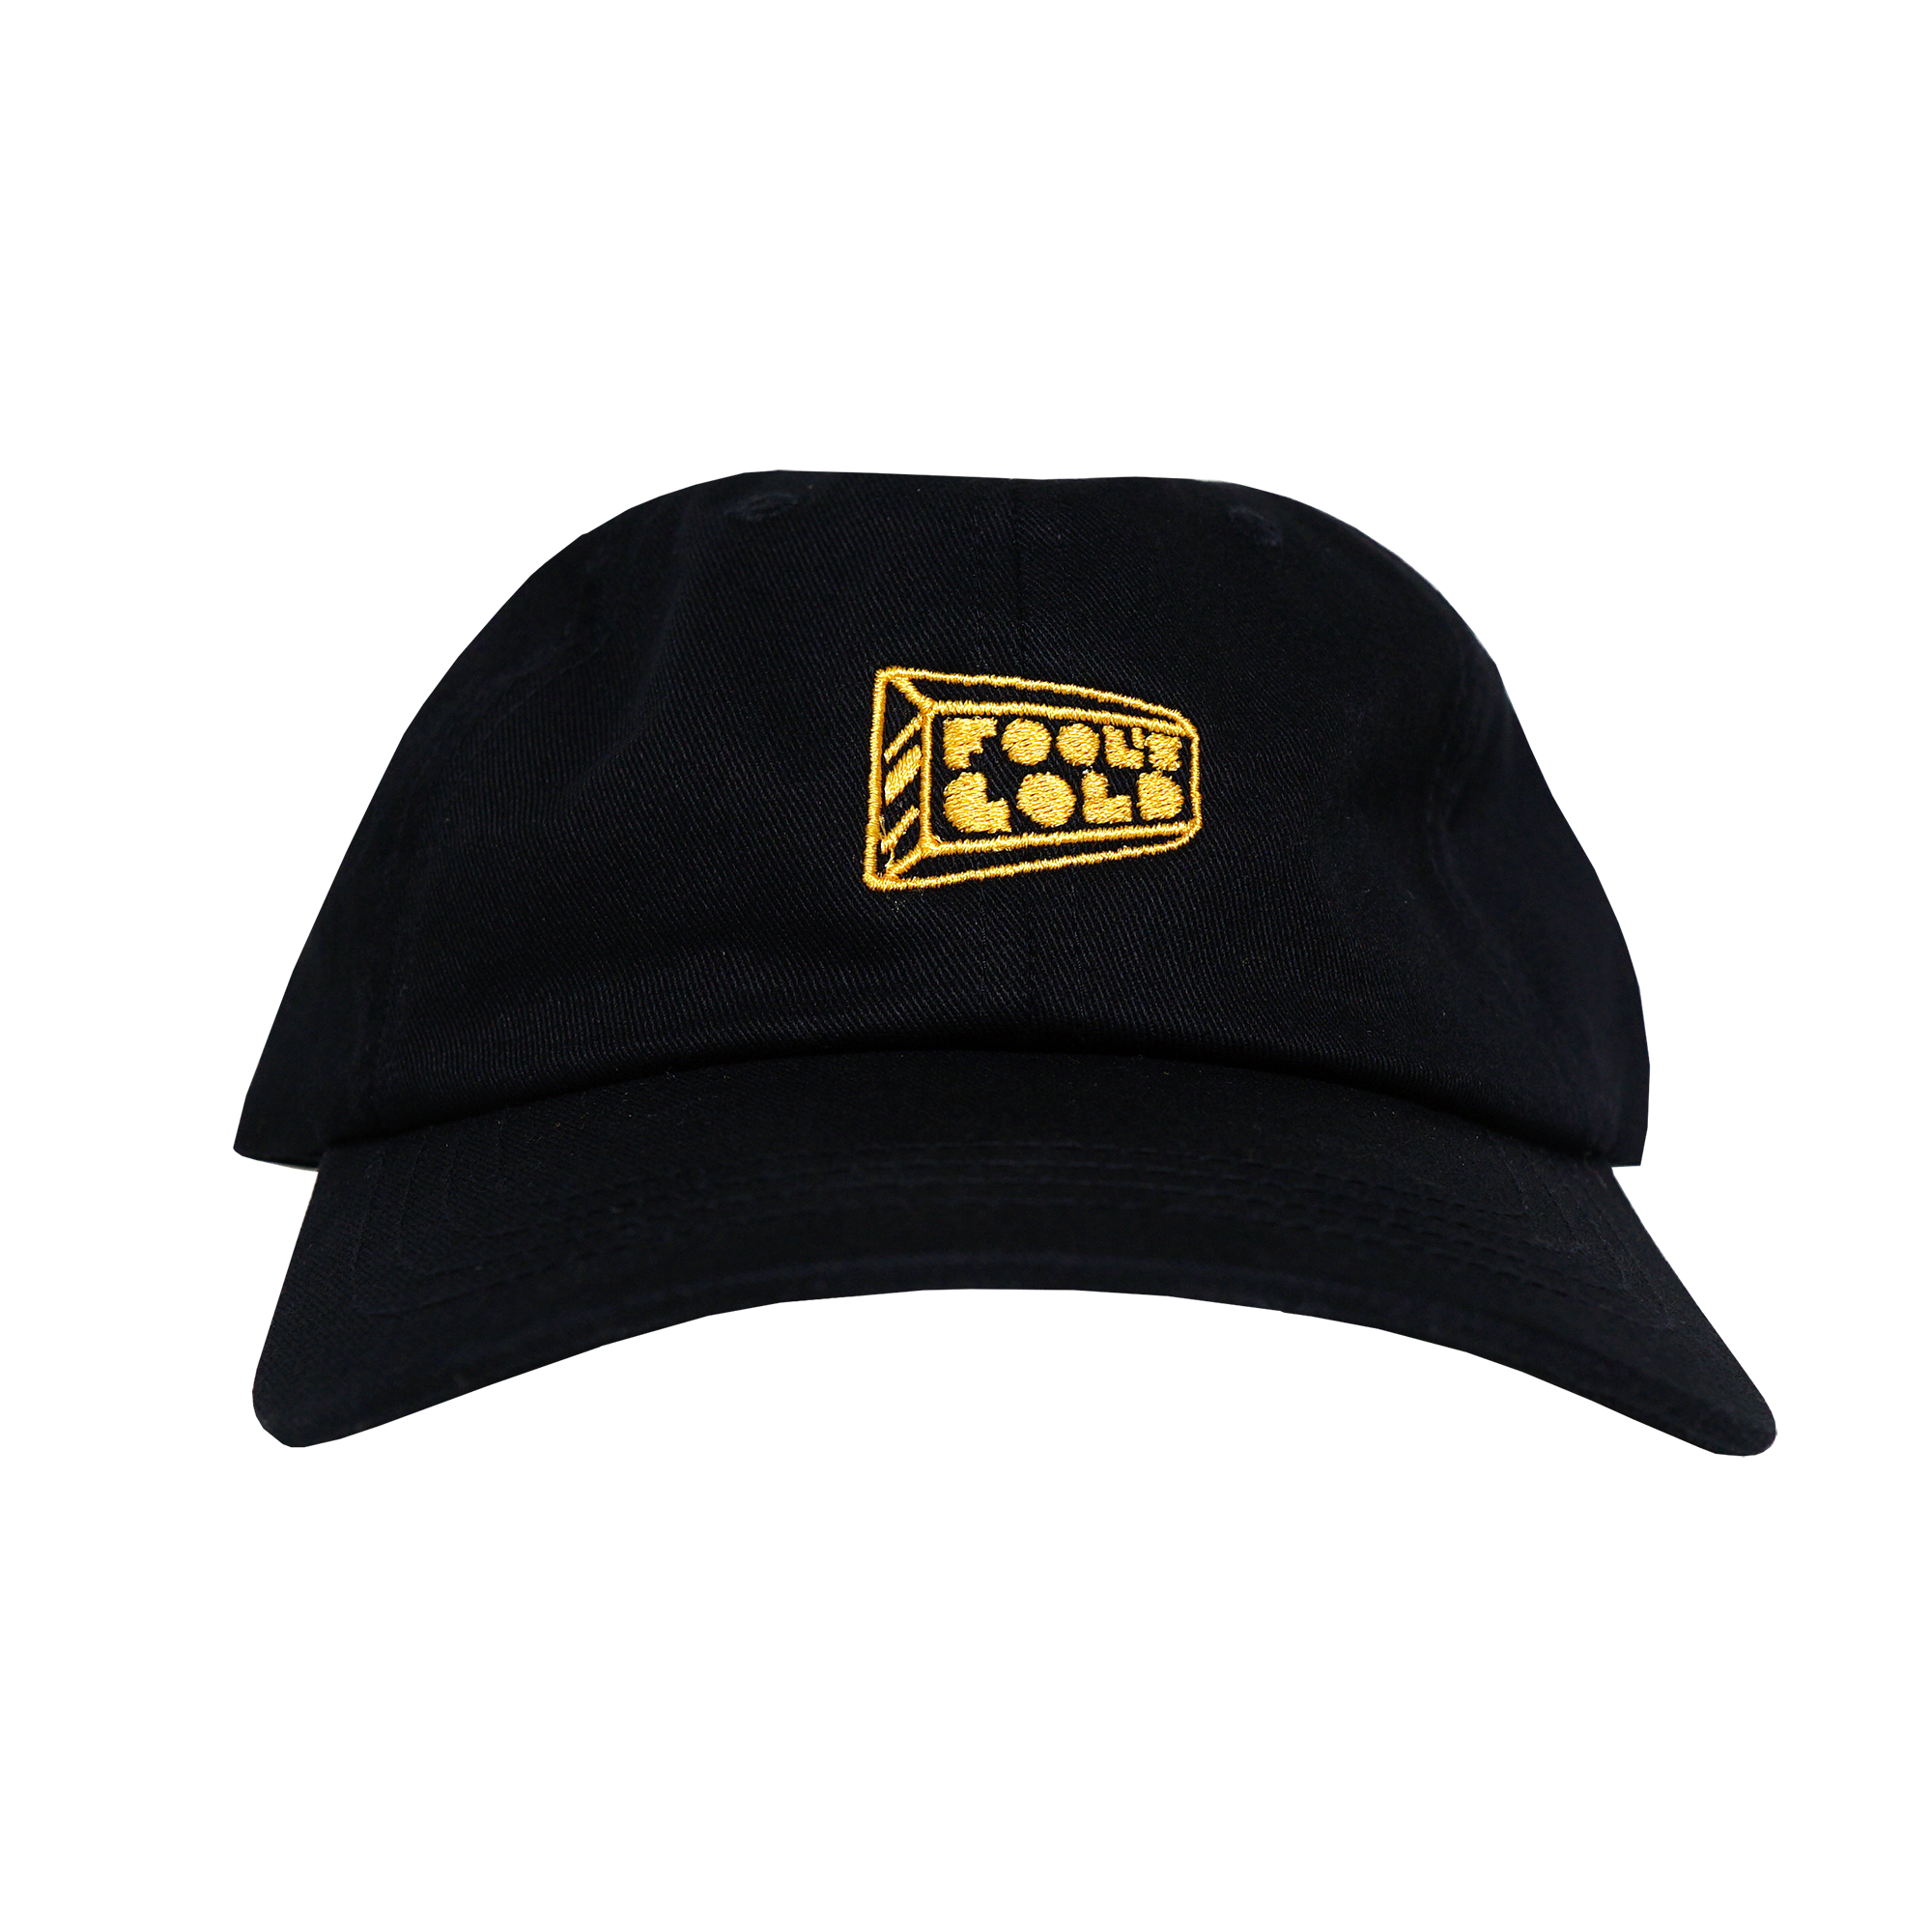 Fool's Gold "Logo" Dad Hat